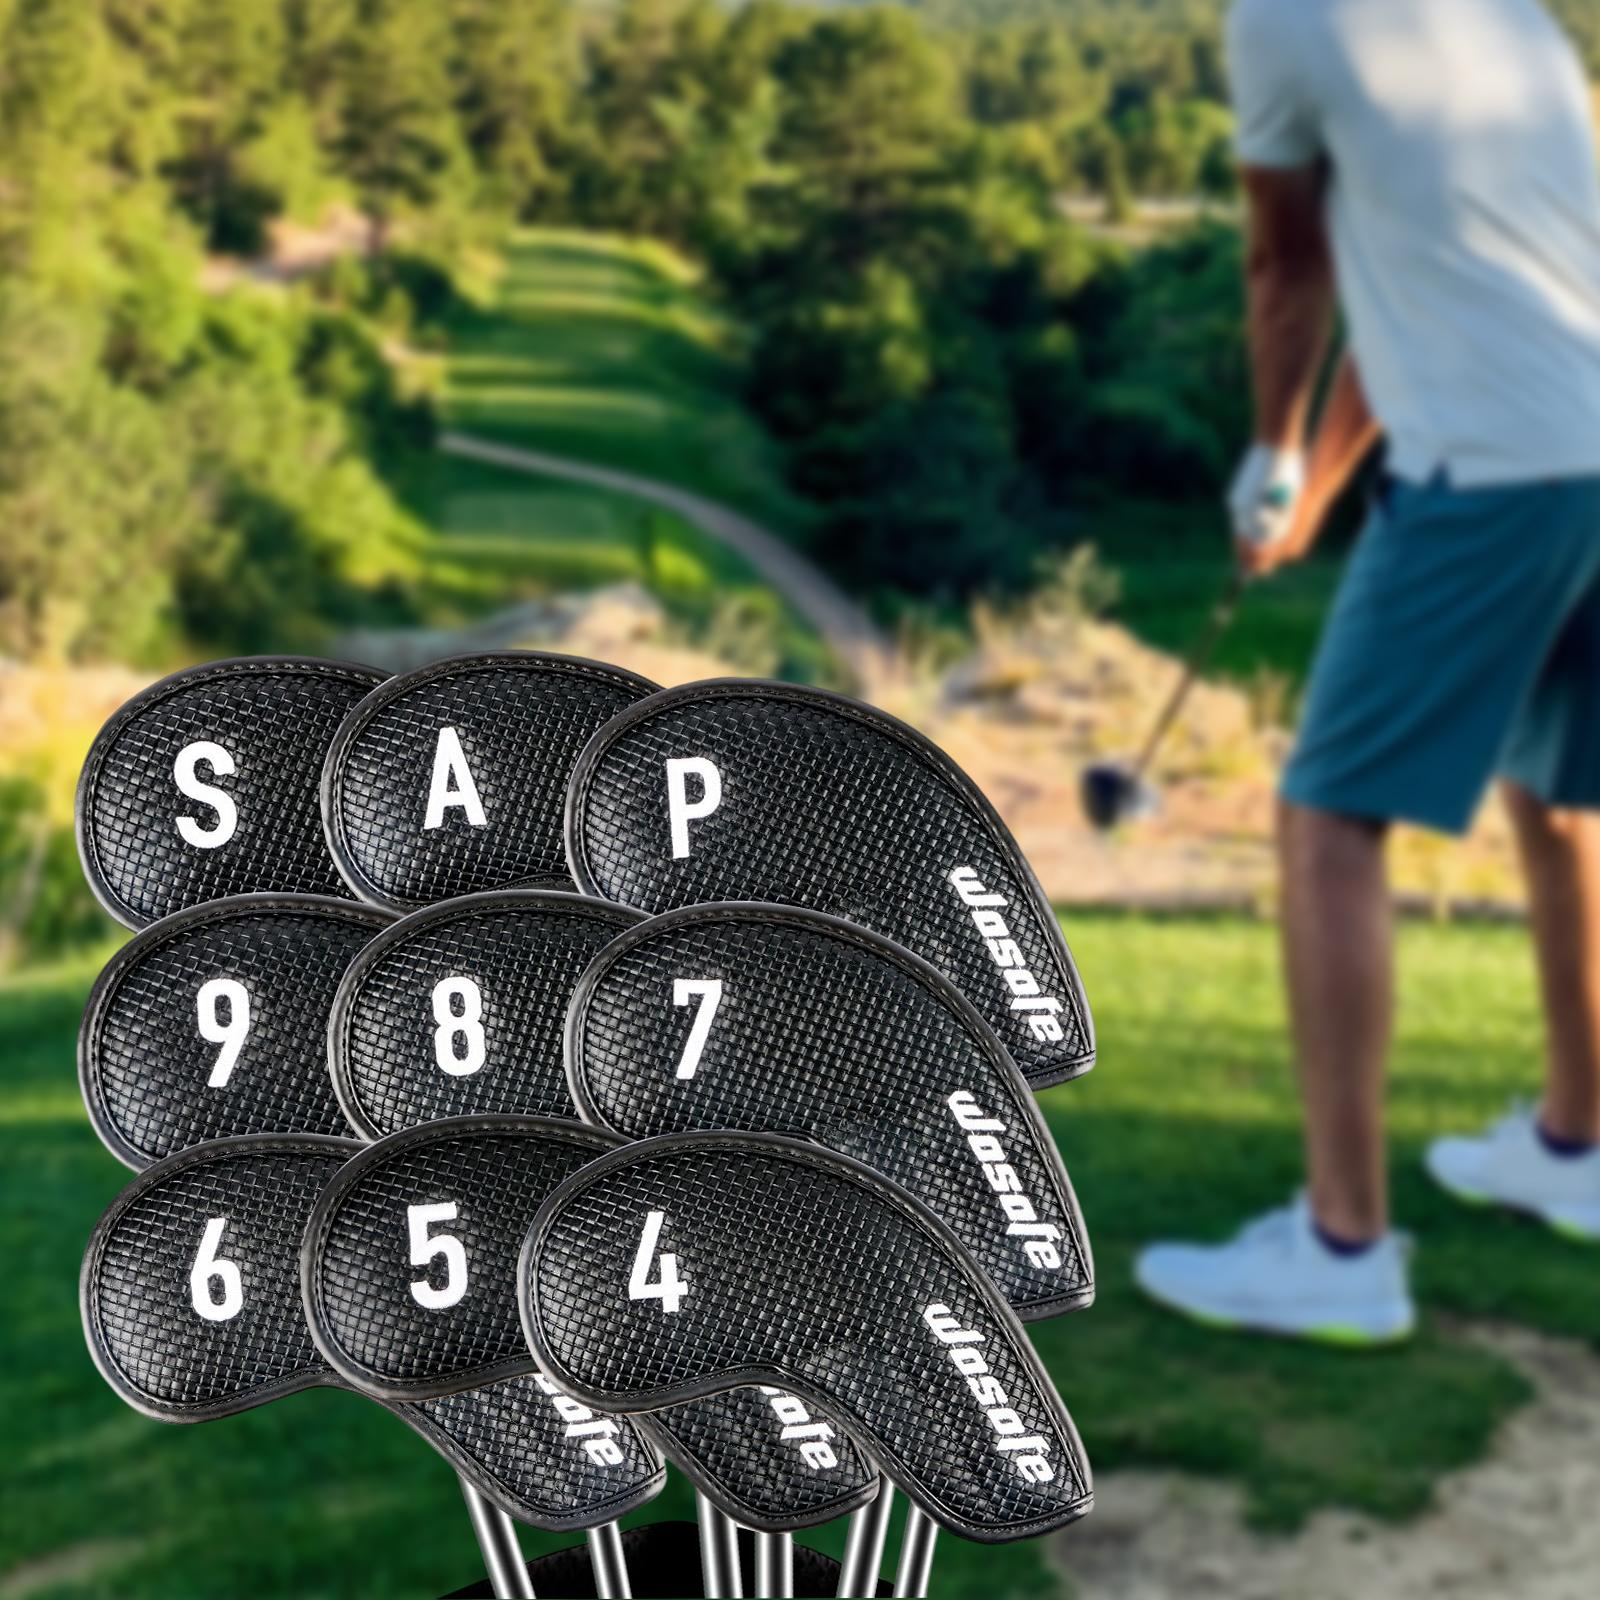 9x Golf Iron Head Covers Set Long Neck Golf Club Head Cover Golf Accessories Black Woven Texture